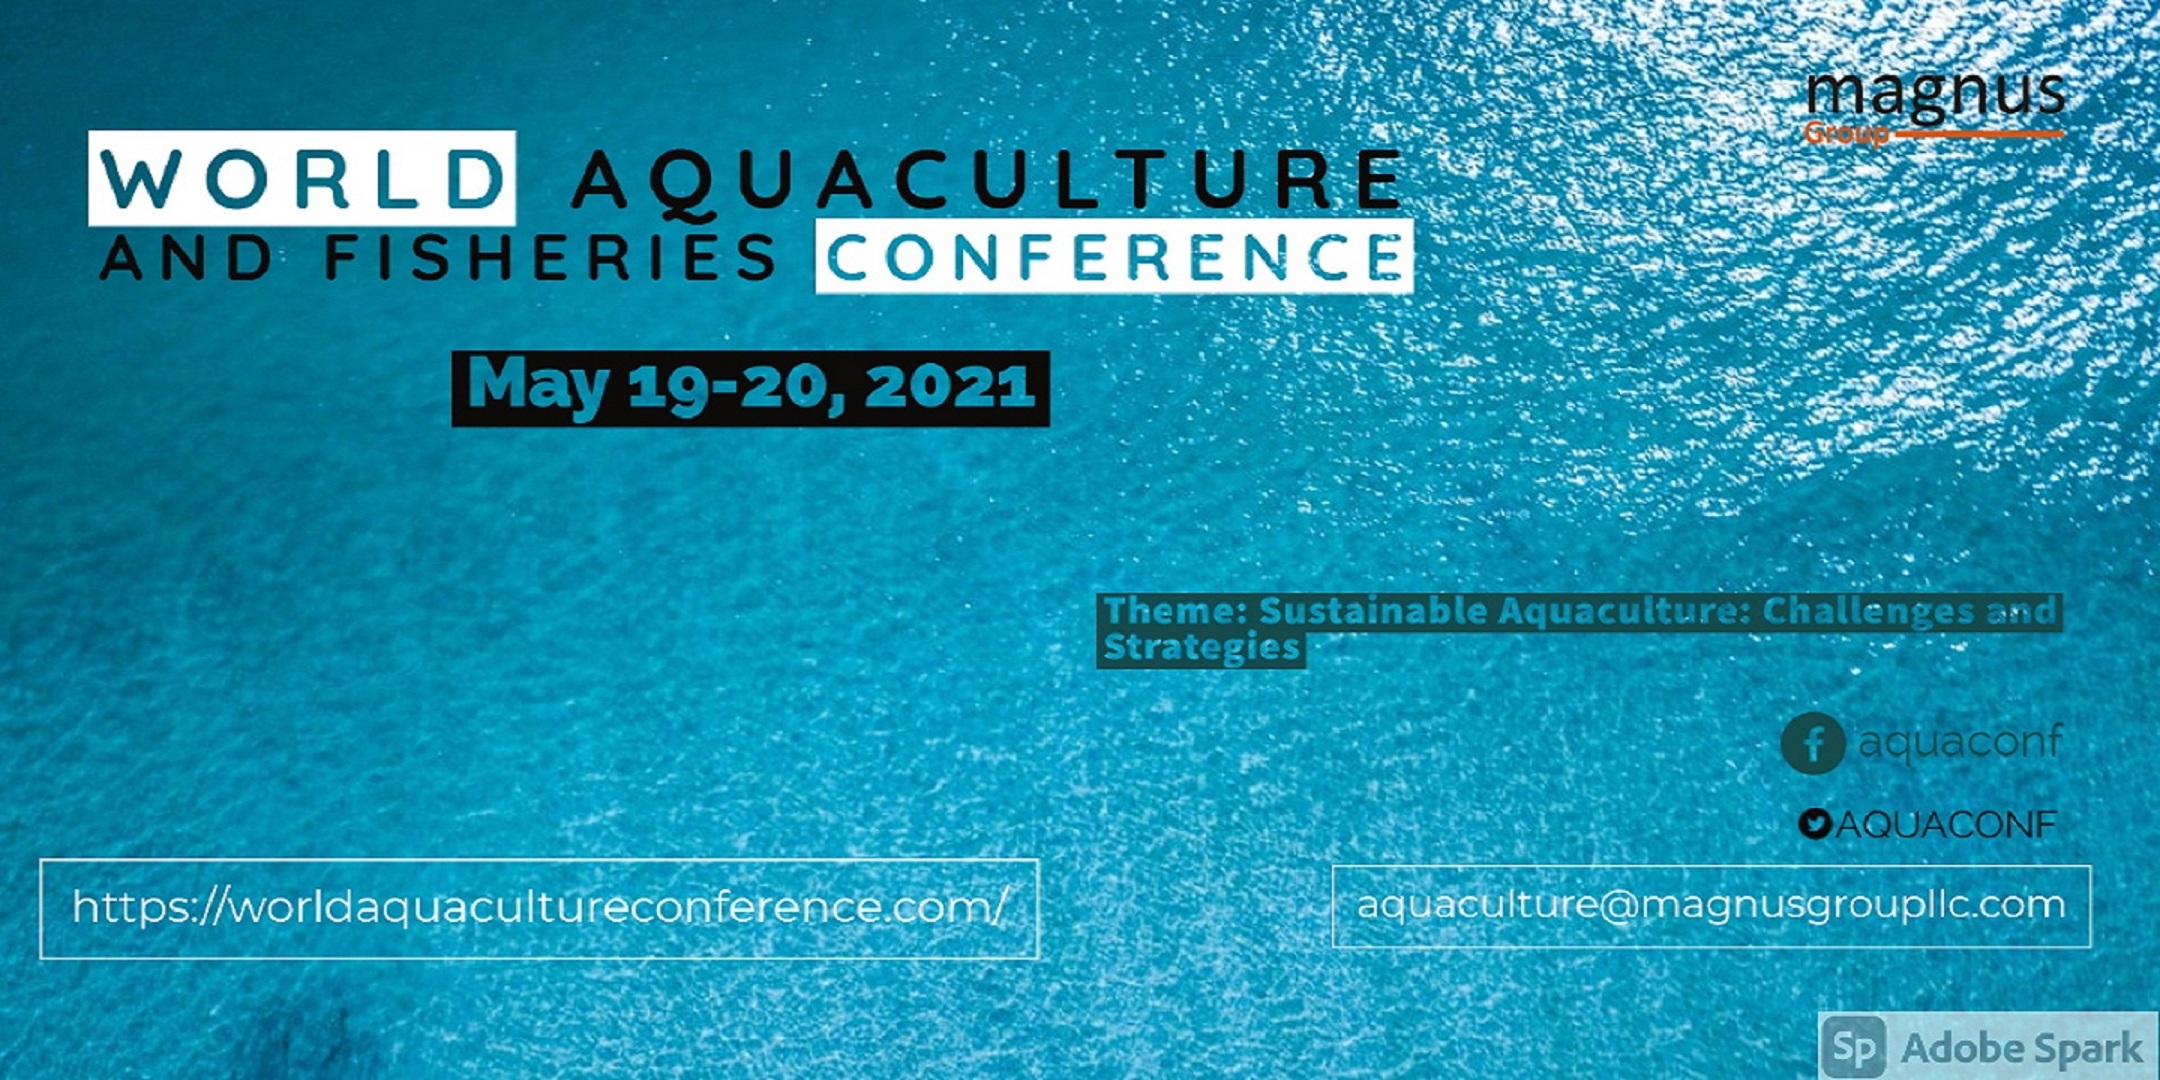 World Aquaculture and Fisheries Conference, Tokyo, Chubu, Japan